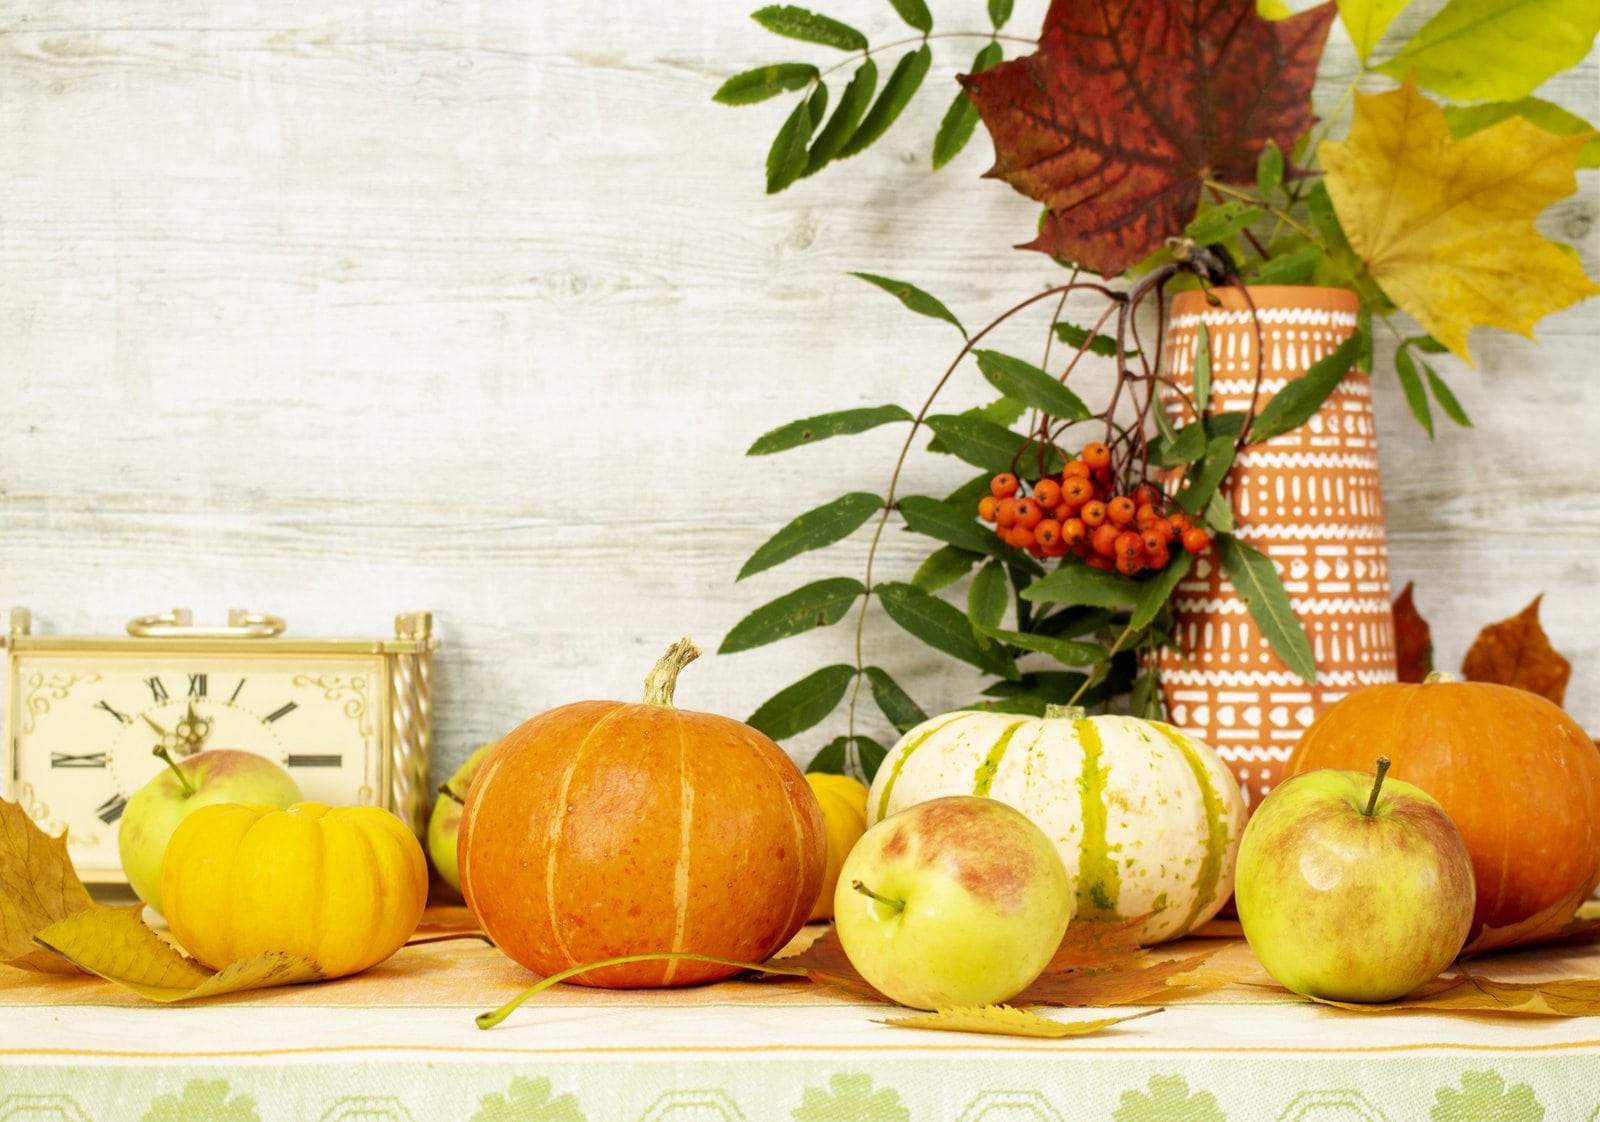 Thanksgiving and autumn - fall home decor ideas